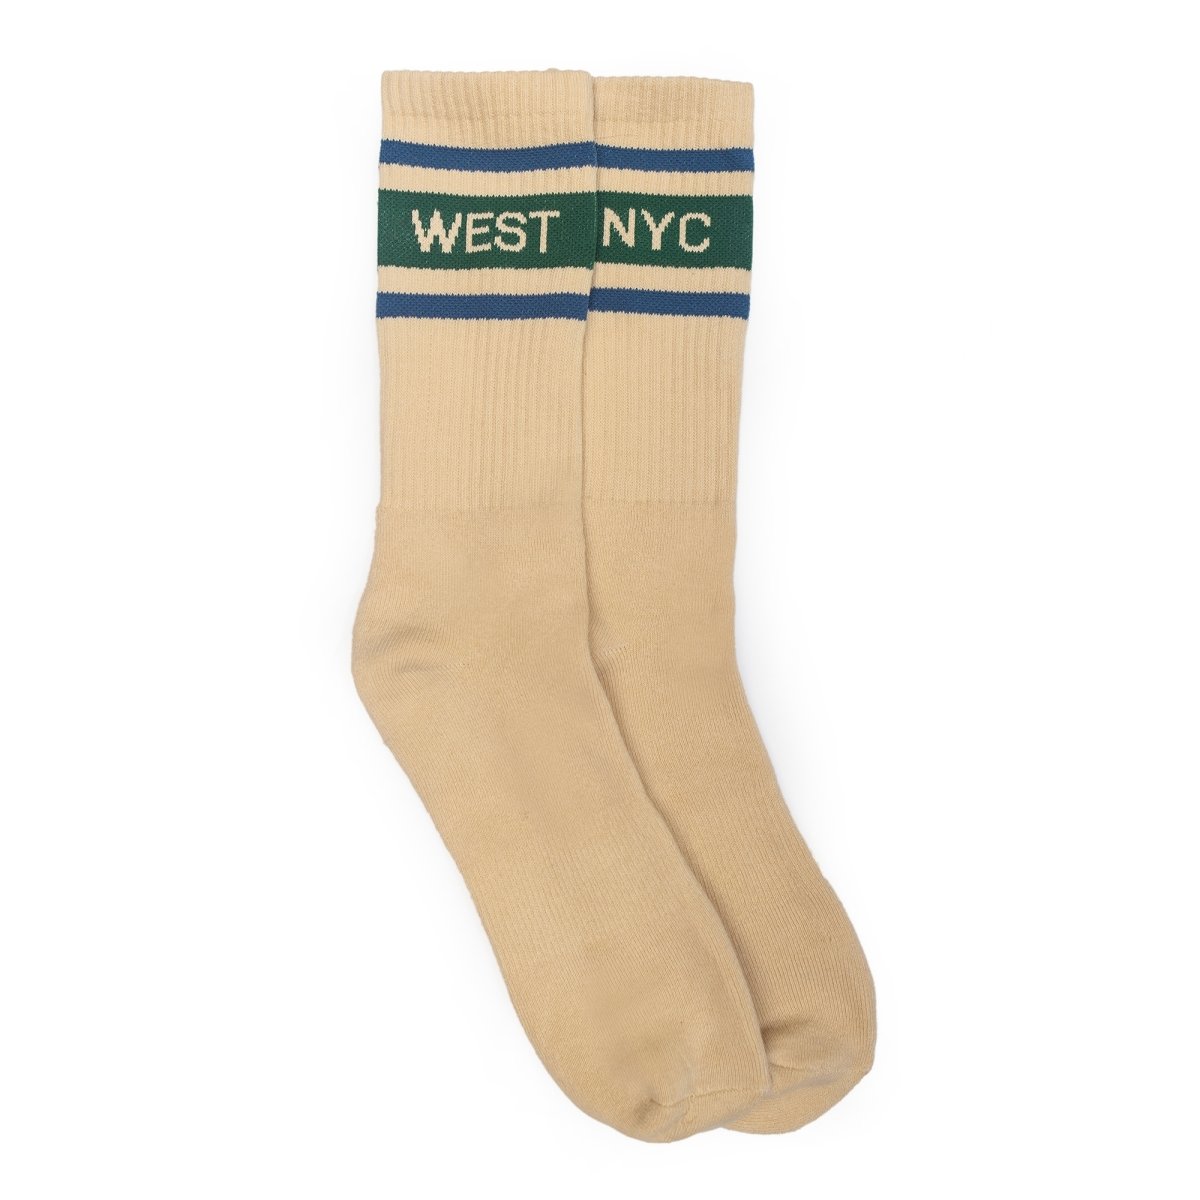 WEST NYC VARSITY BAR SOCK SAIL/GREEN/BLUE - 10026868 - West NYC